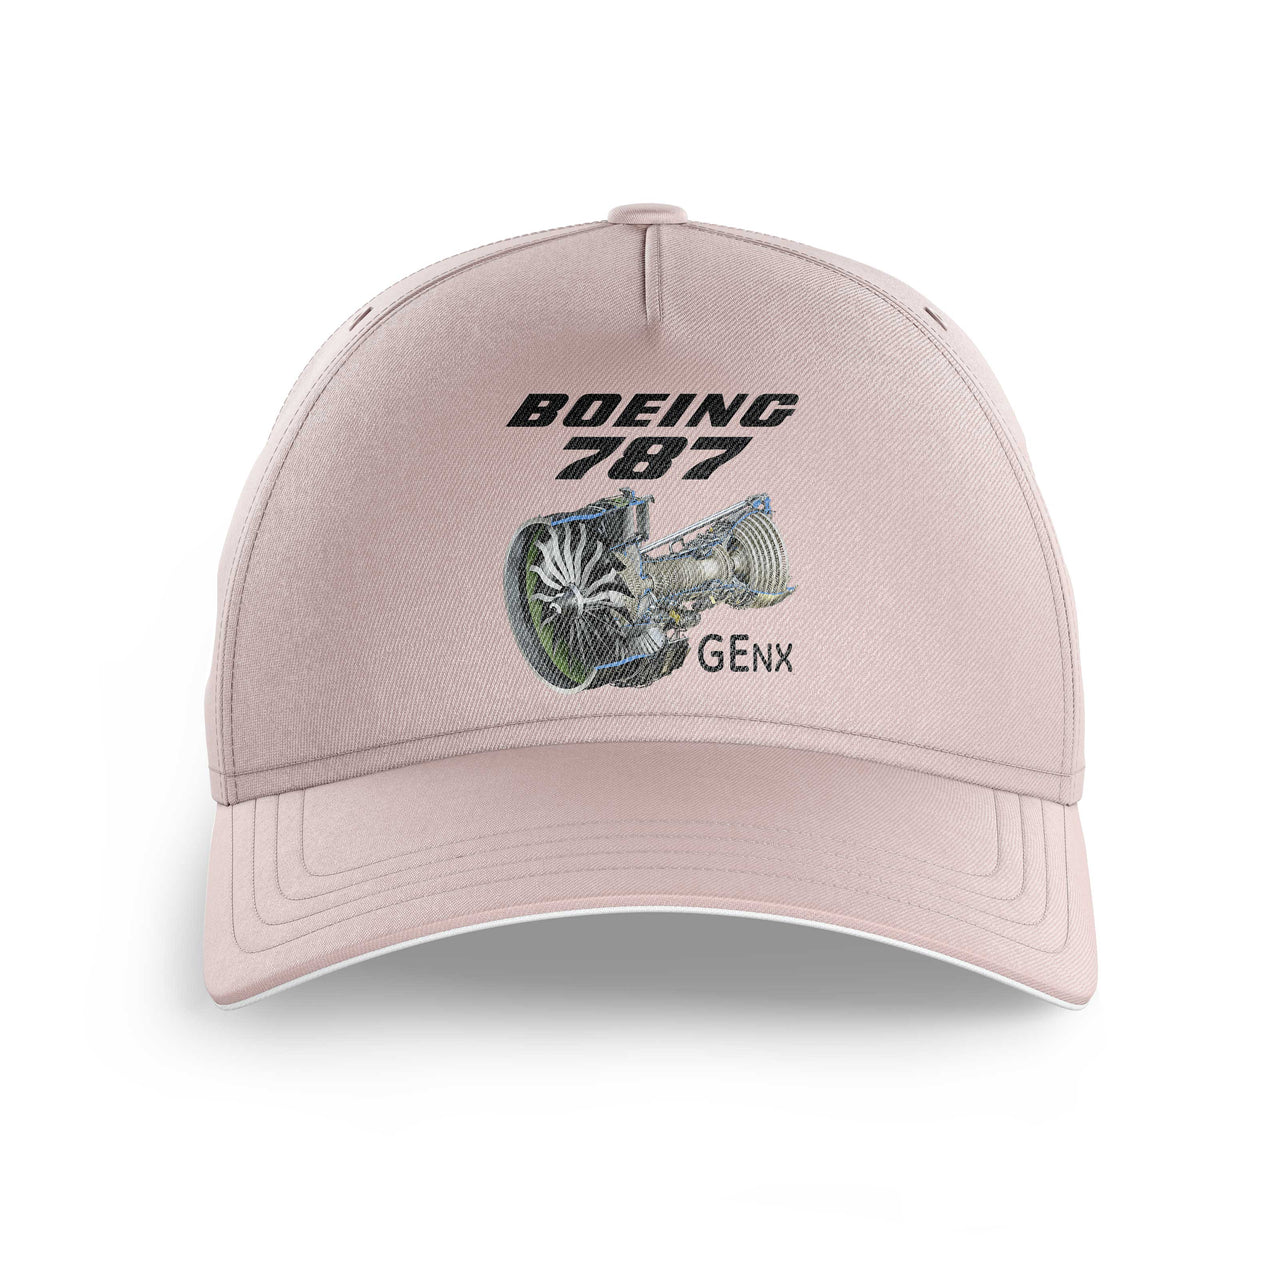 Boeing 787 & GENX Engine Printed Hats